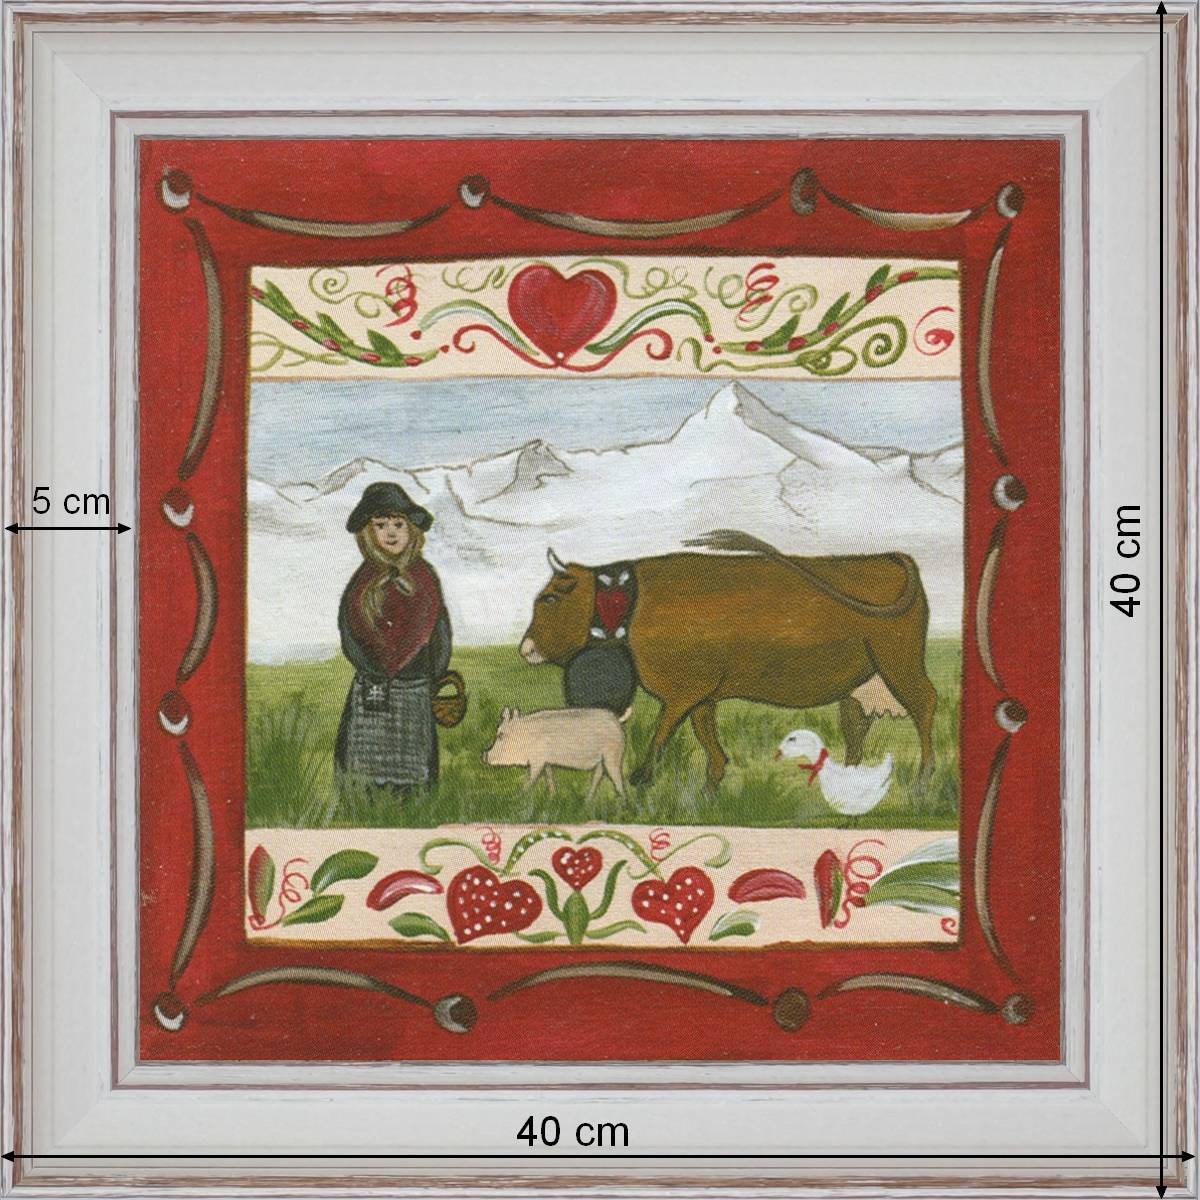 Farm and Animals - dimensions 40 x 40 cm